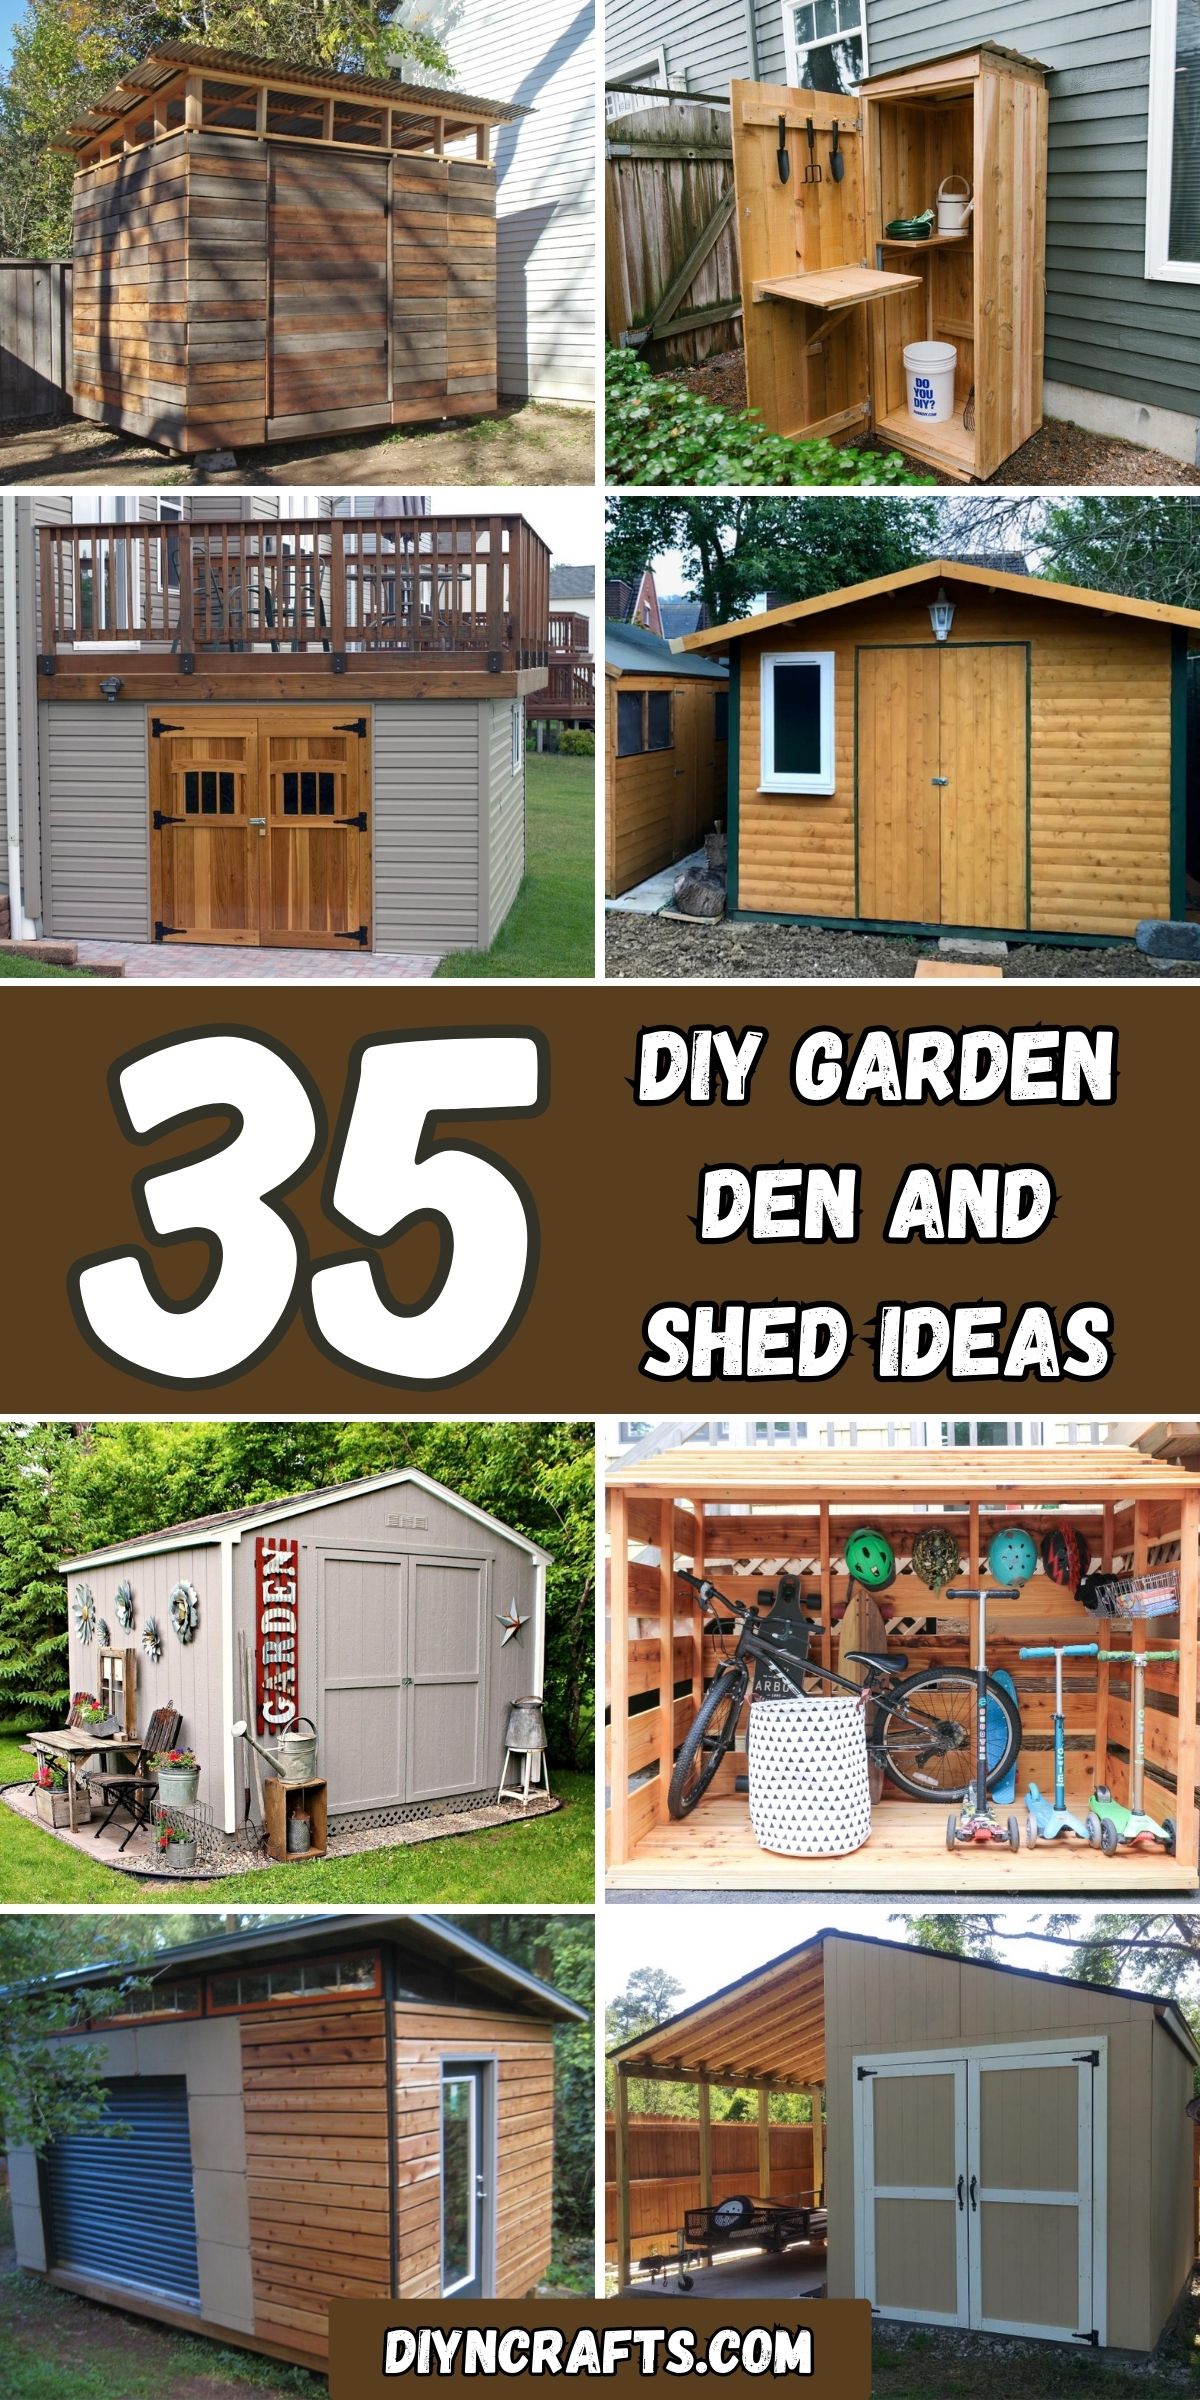 35 DIY Garden Den and Shed Ideas collage.